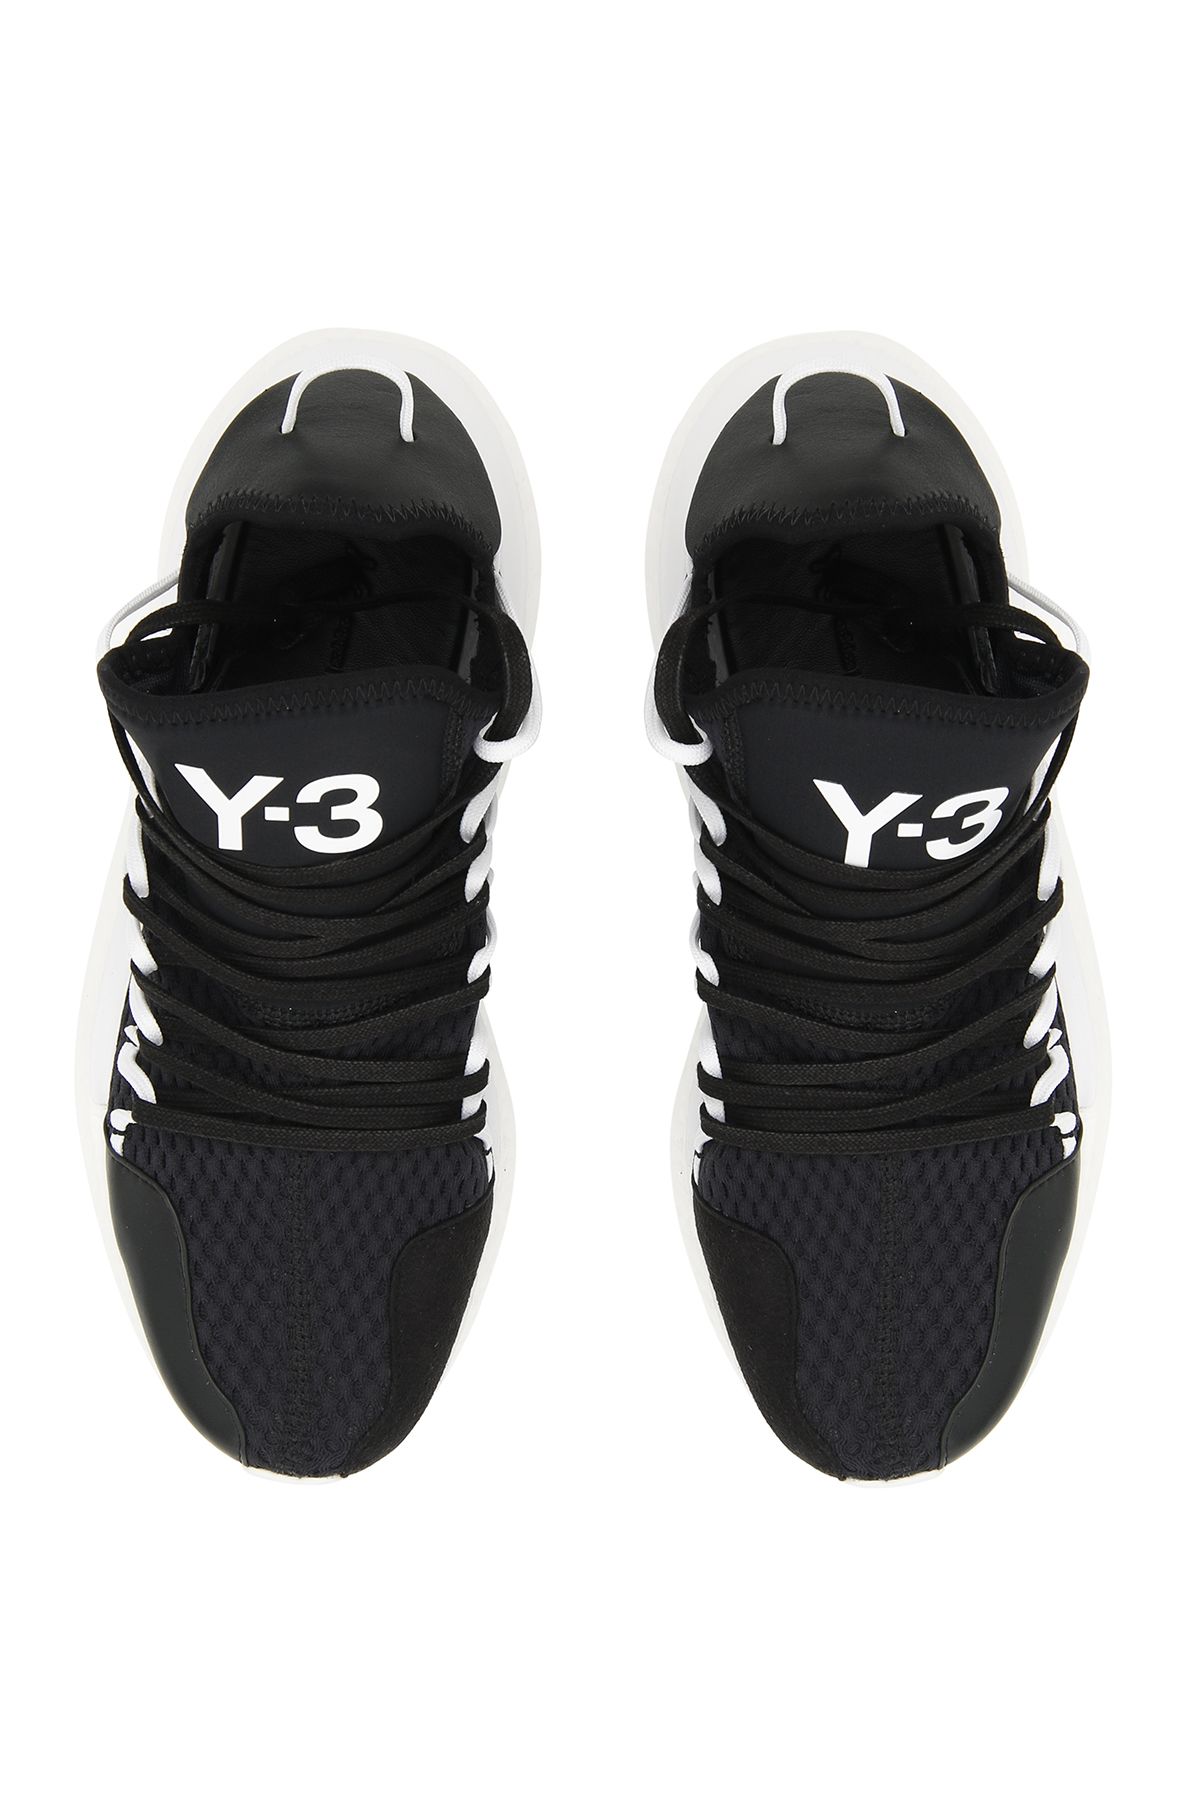 02-adidas-y-3-kusari-black-white-db2079